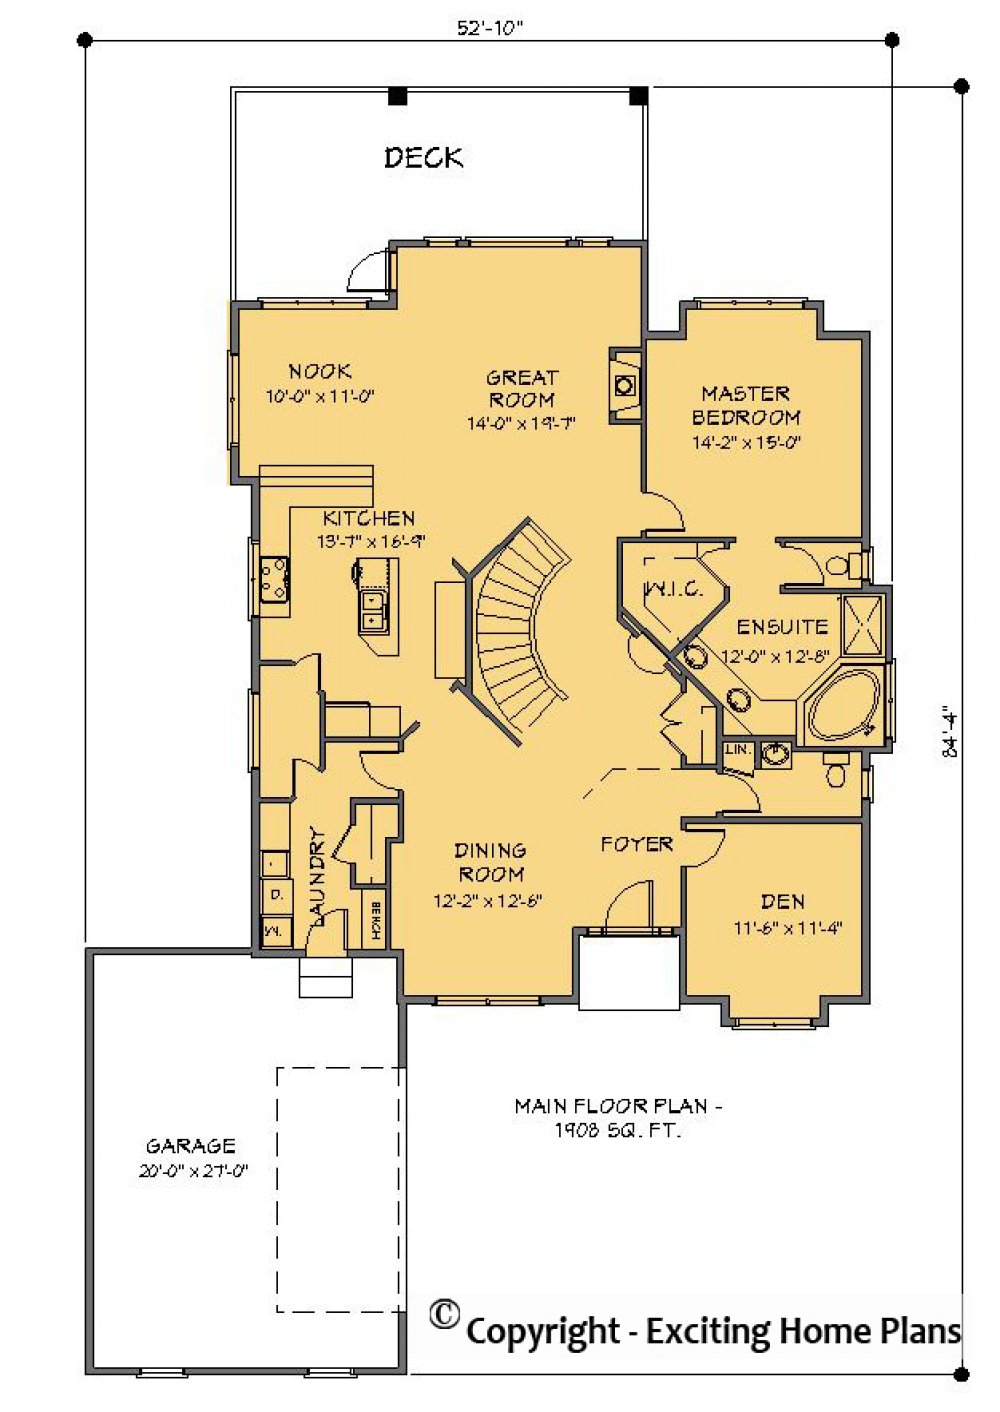 House Plan E1238-10  Main Floor Plan